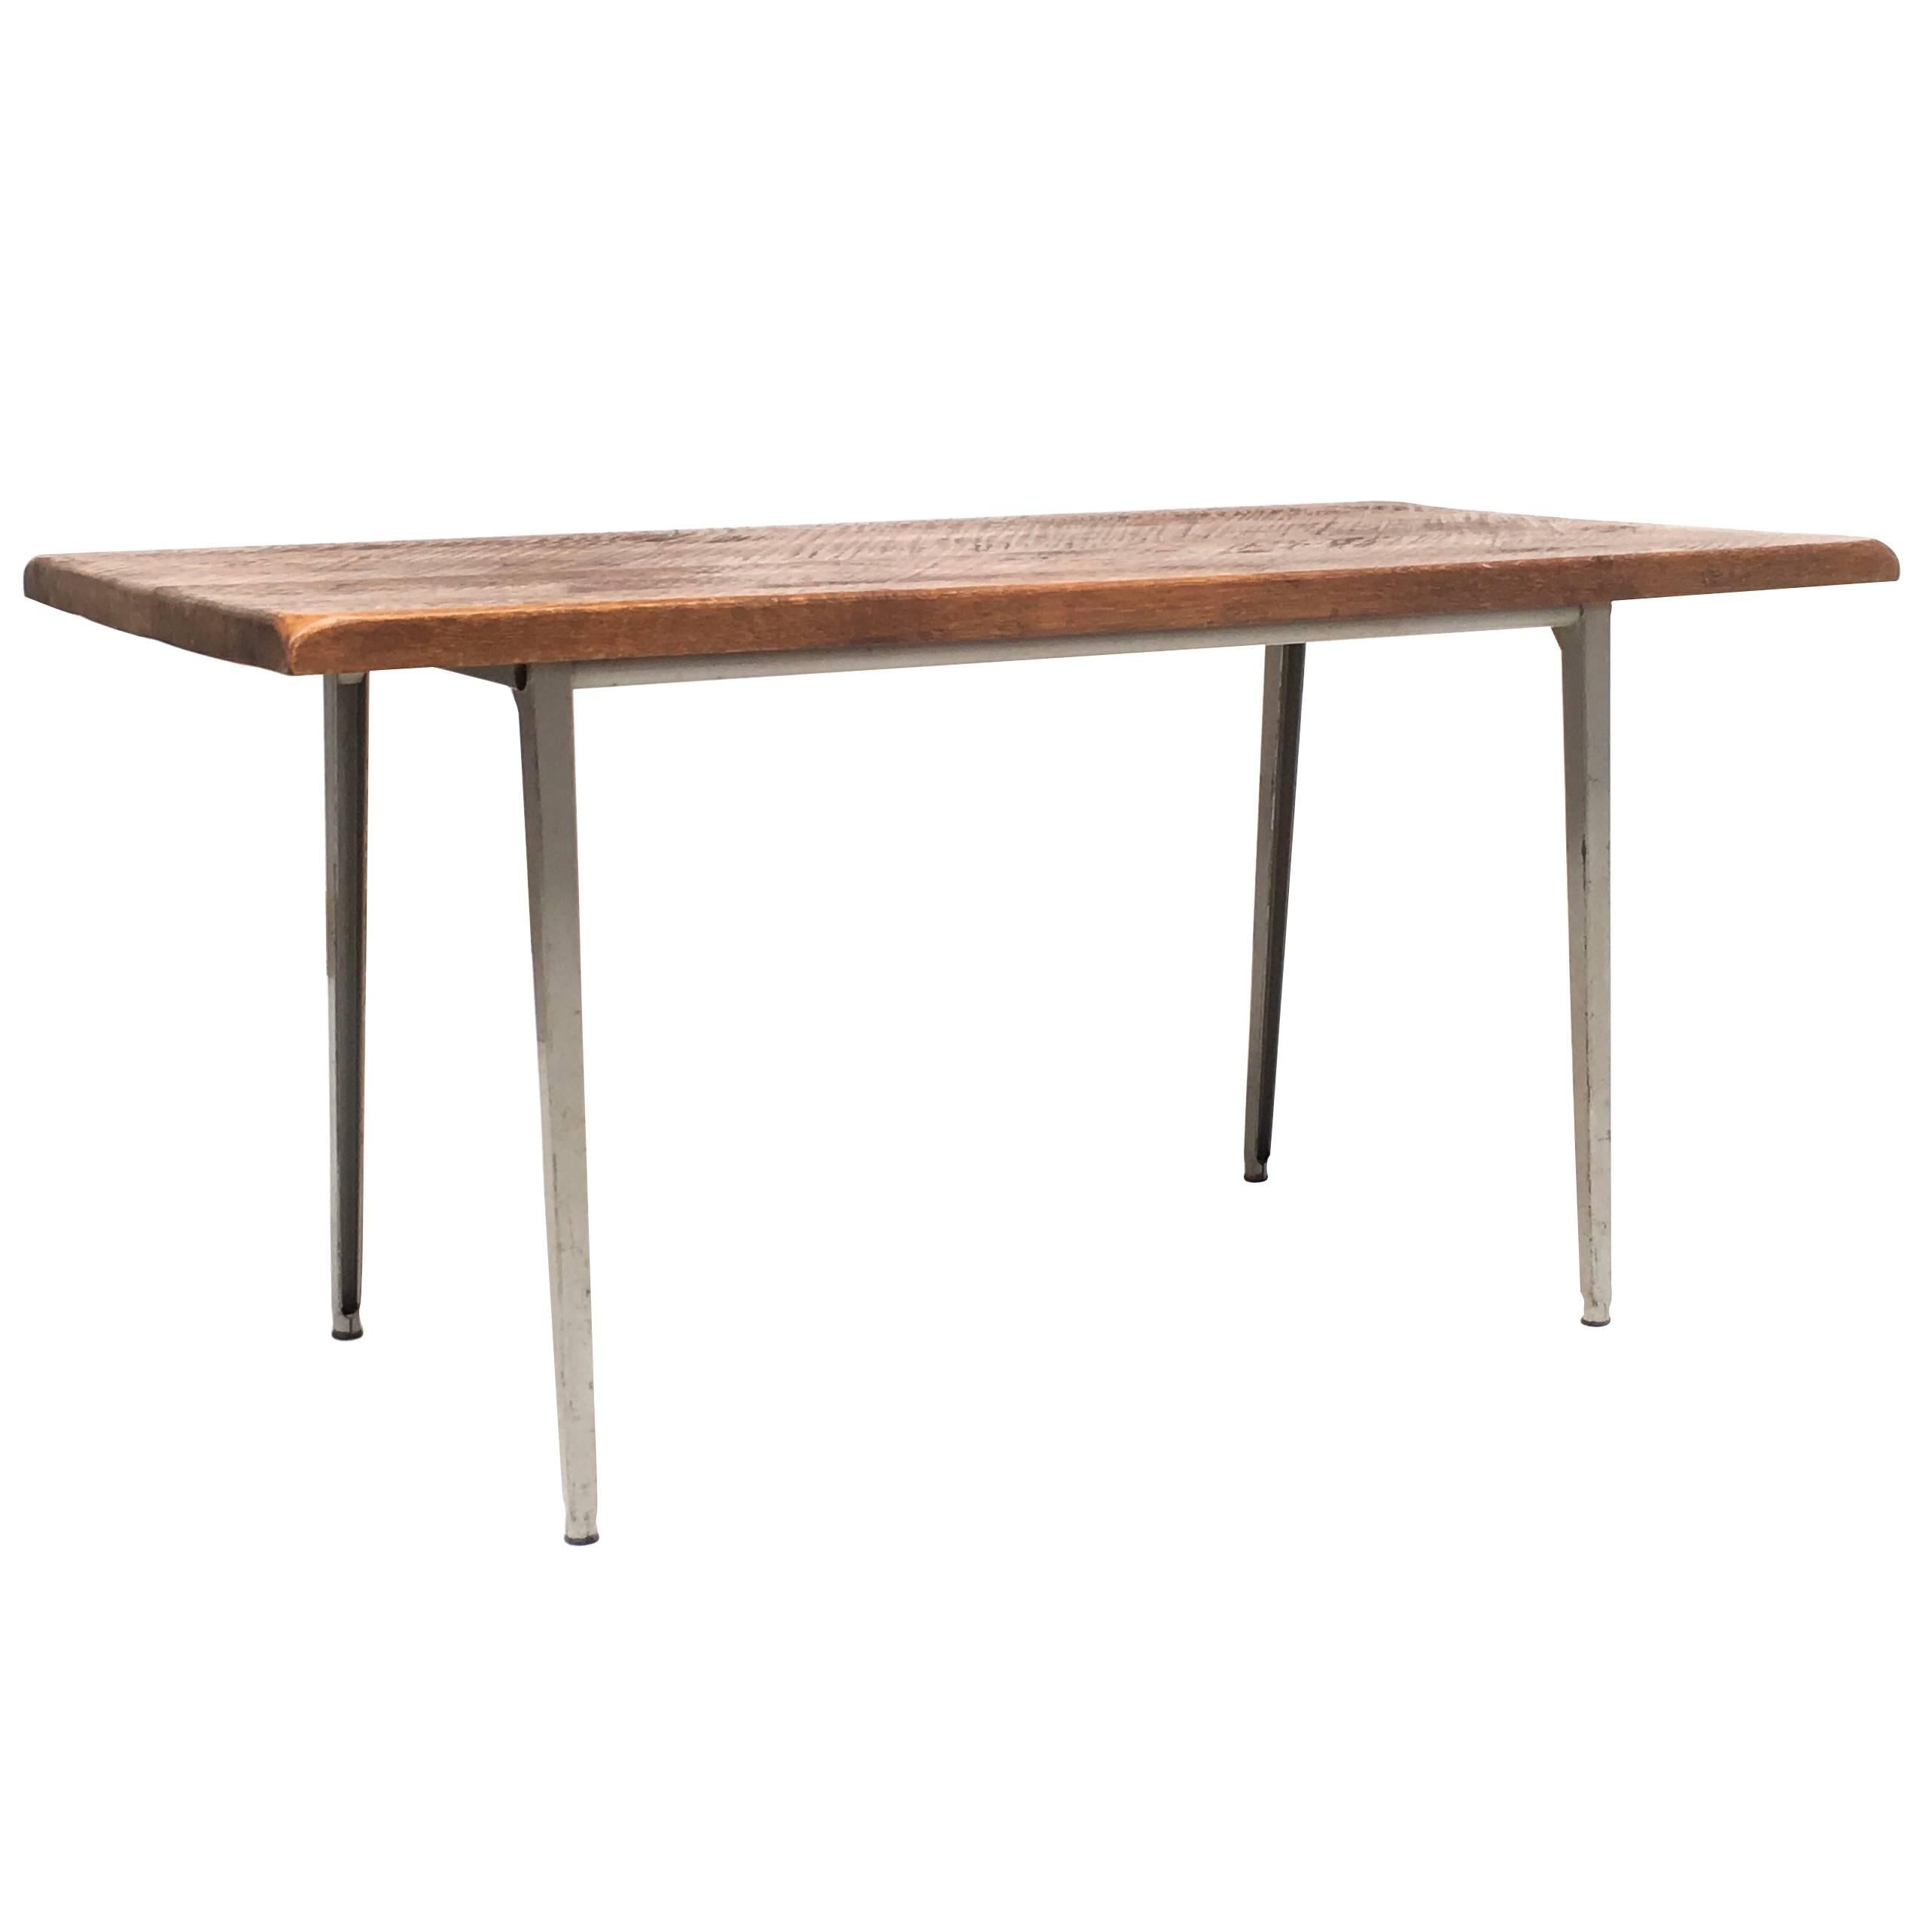 Friso Kramer 'Reform' Table or Desk with Reclaimed Rustic Oak Top For Sale